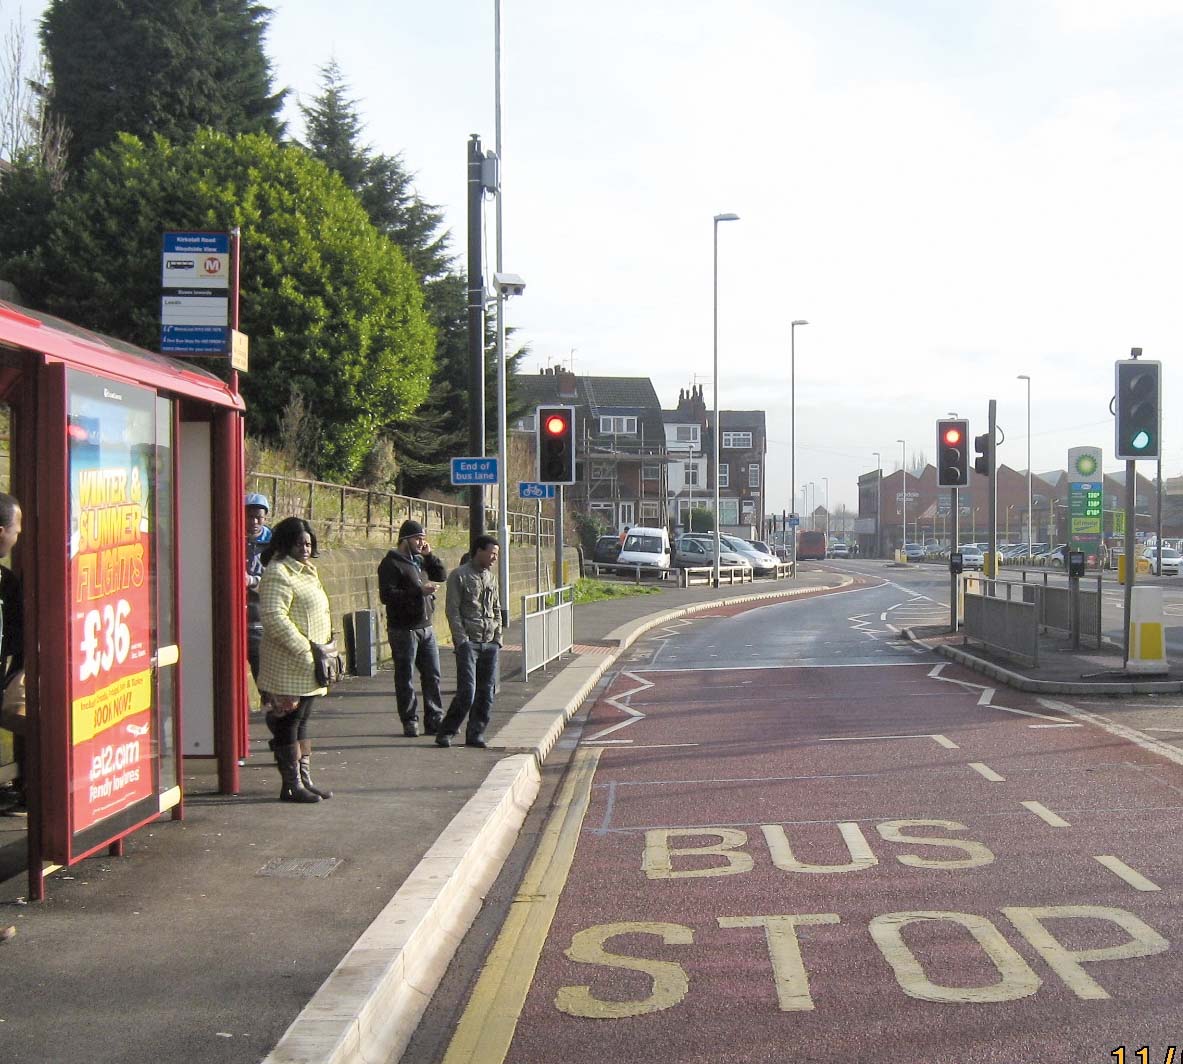 Videalert bus lane enforcement in Leeds